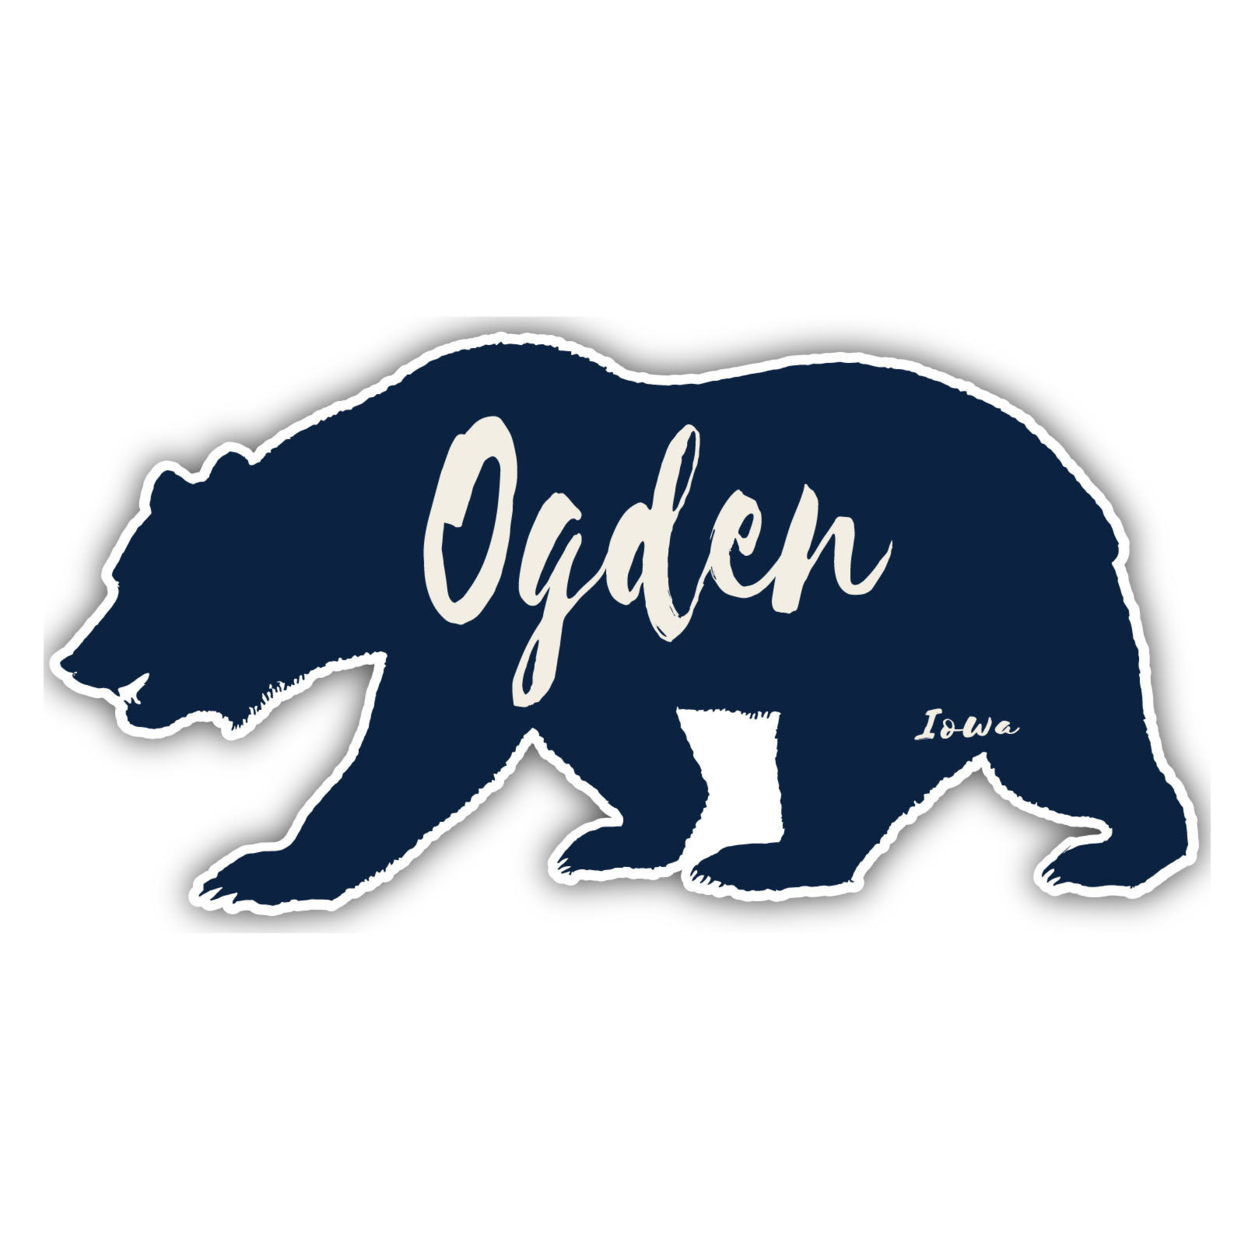 Ogden Utah Souvenir Decorative Stickers (Choose Theme And Size) - Single Unit, 2-Inch, Bear